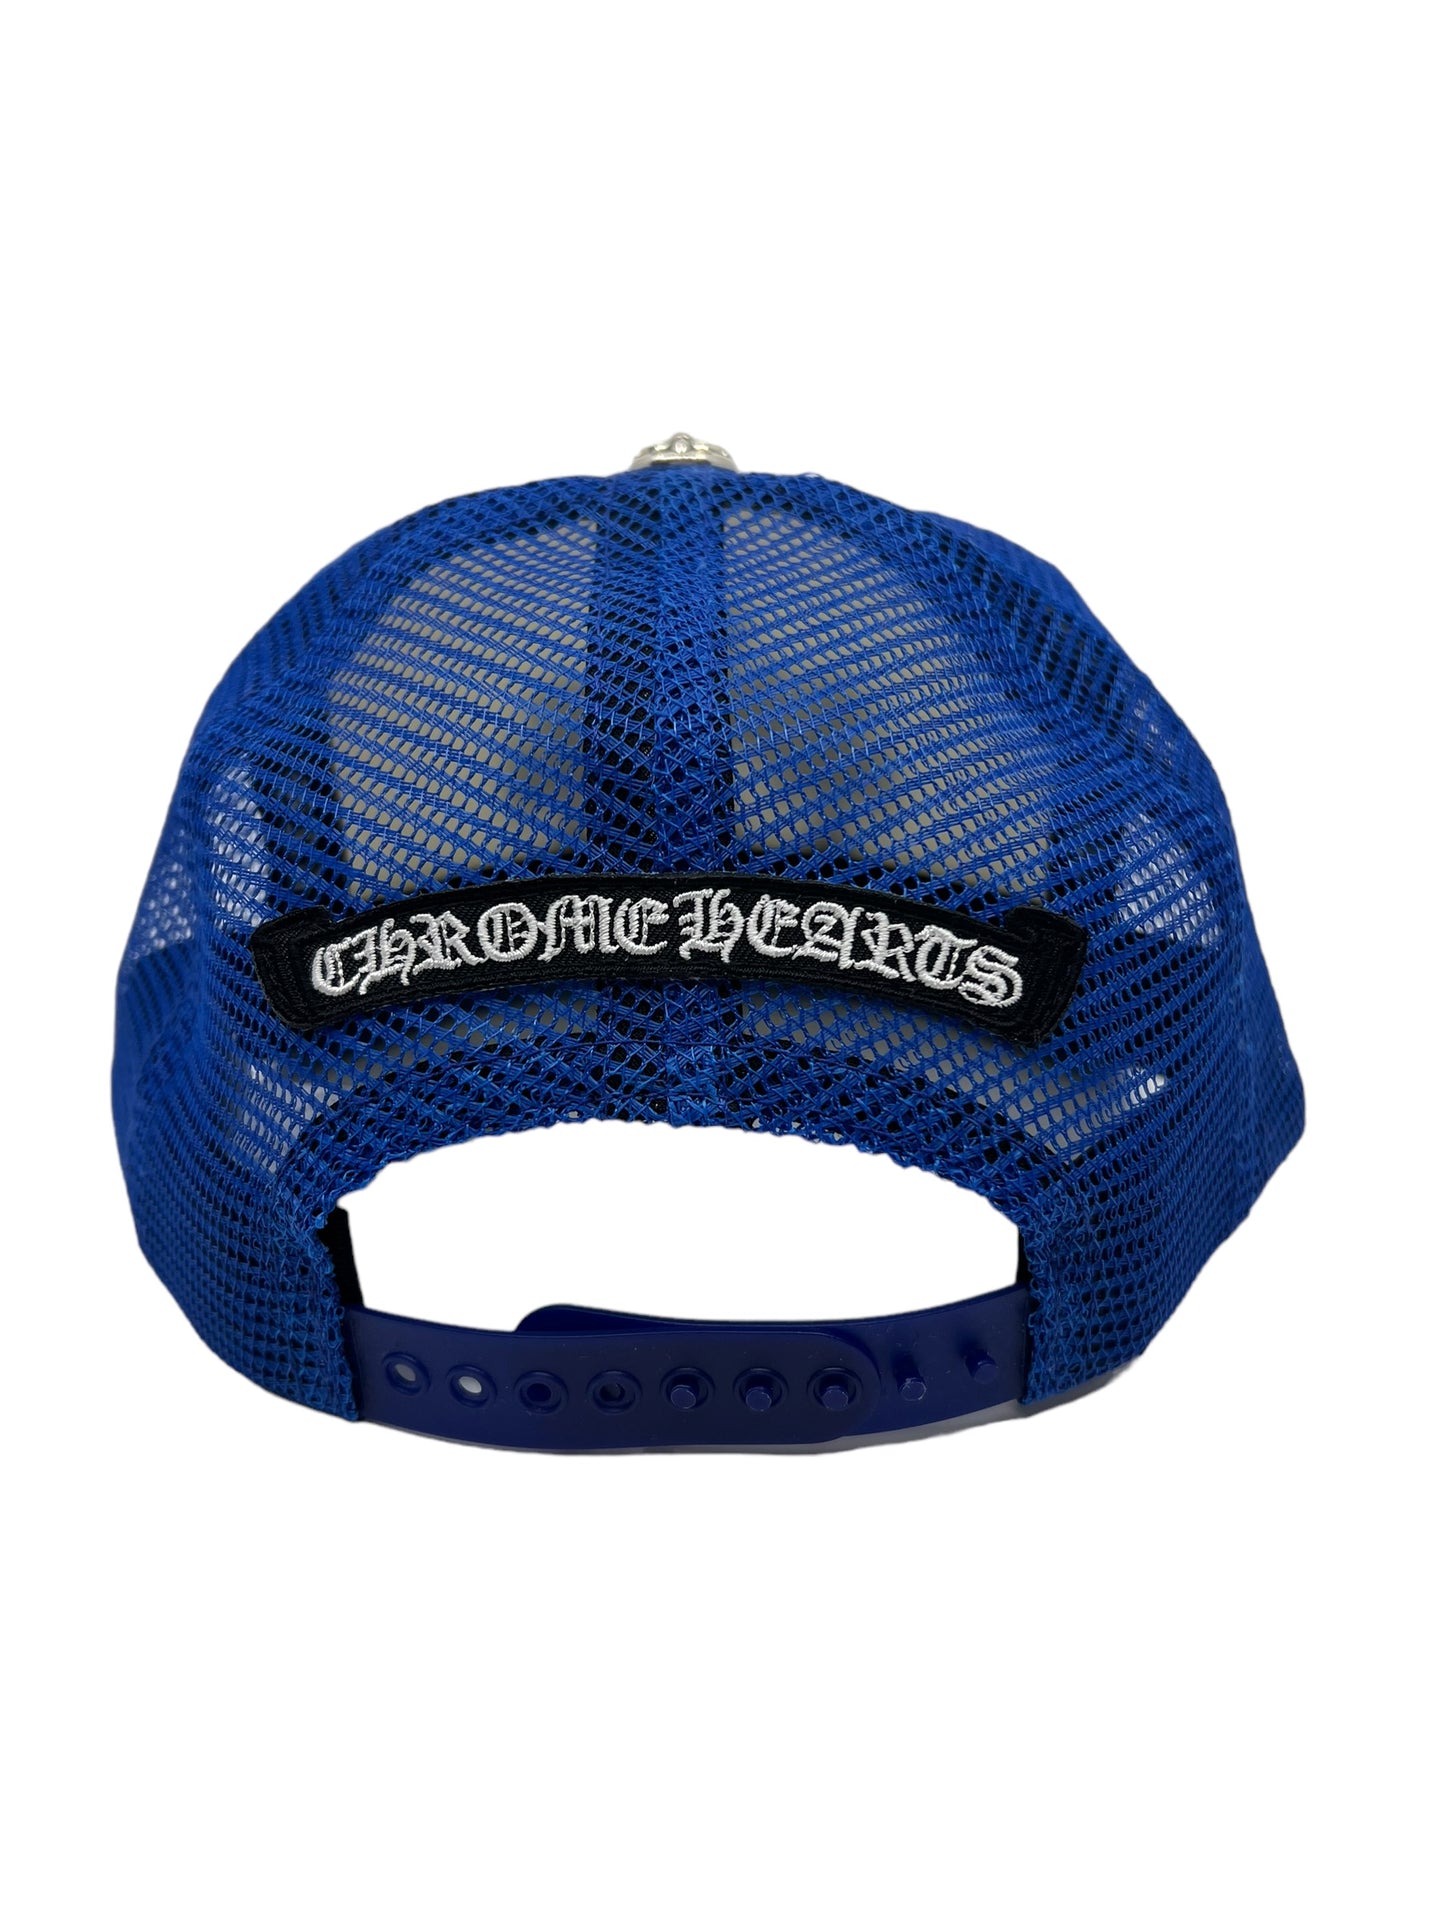 Chrome Hearts King Taco Blue Trucker Hat new